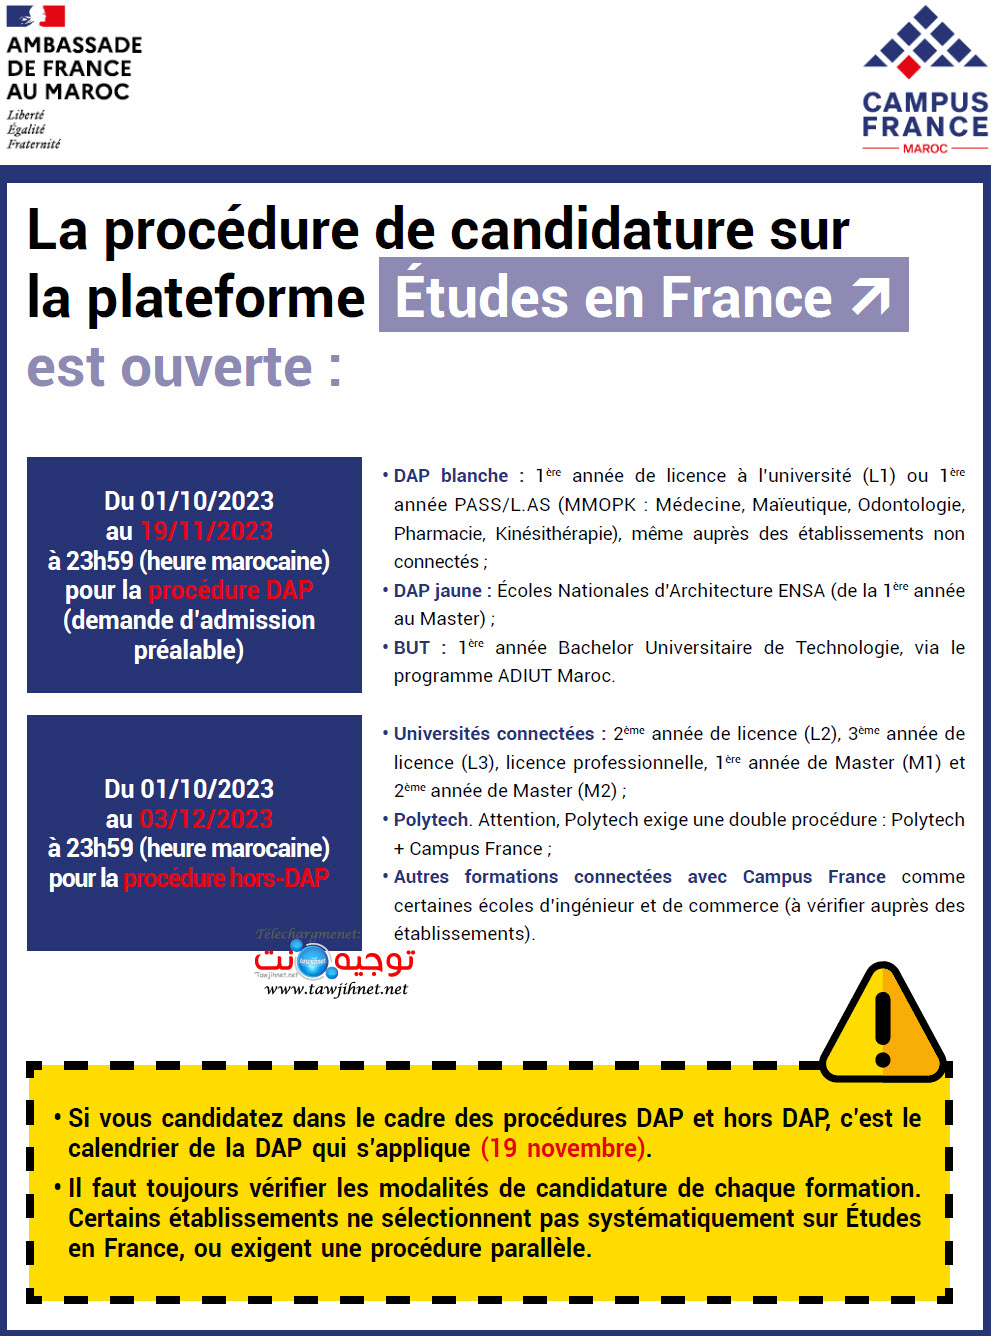 Procedure-campus-france-maroc-2023.jpg